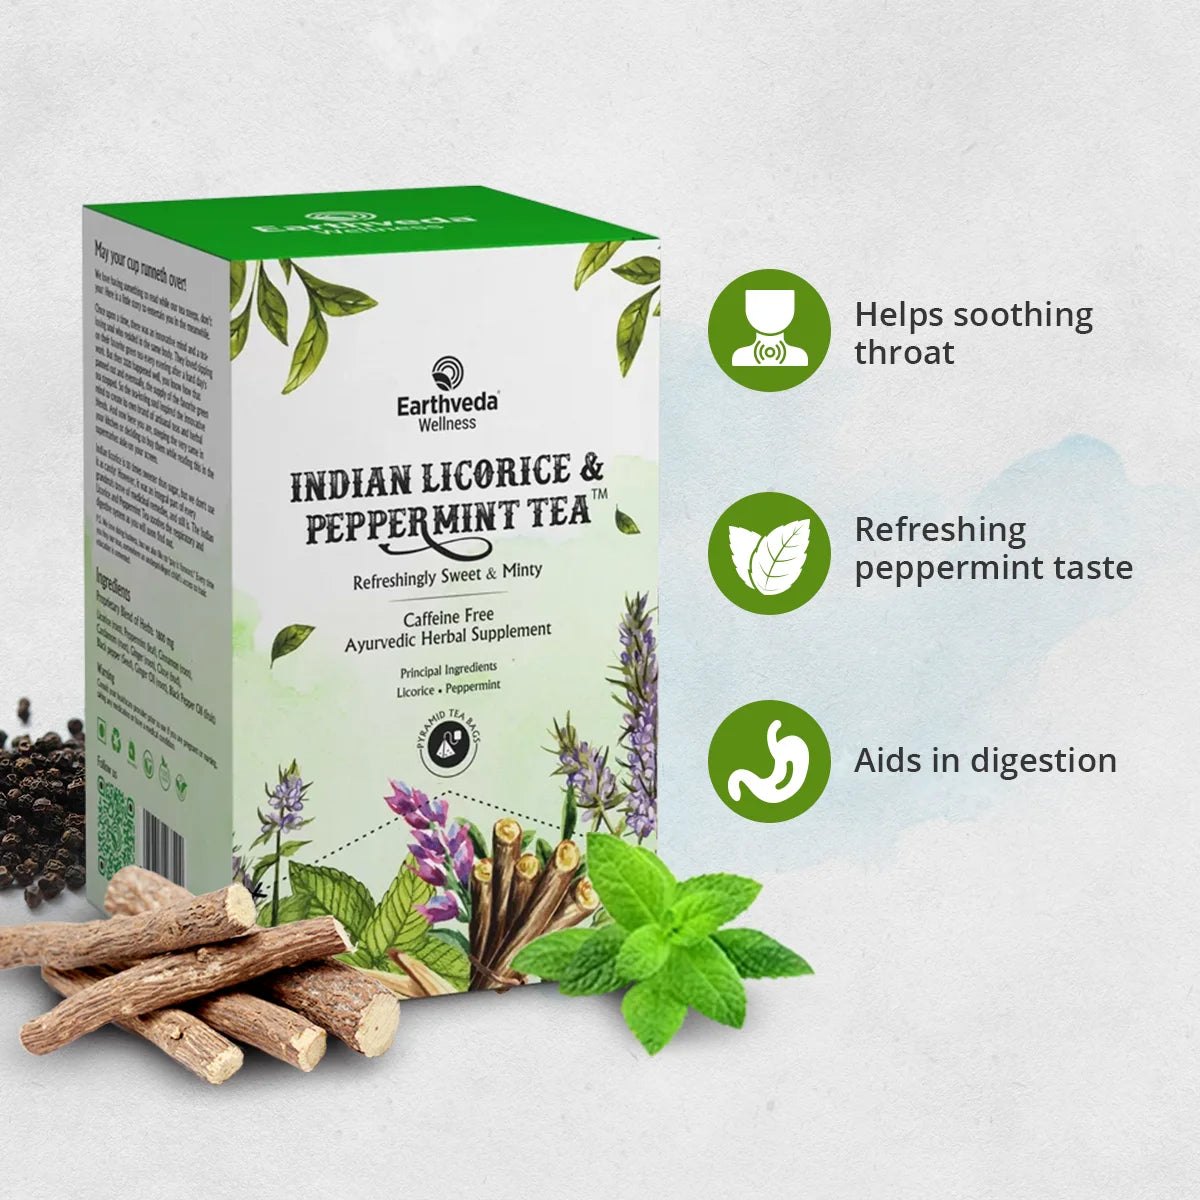 Indian Licorice & Peppermint Tea